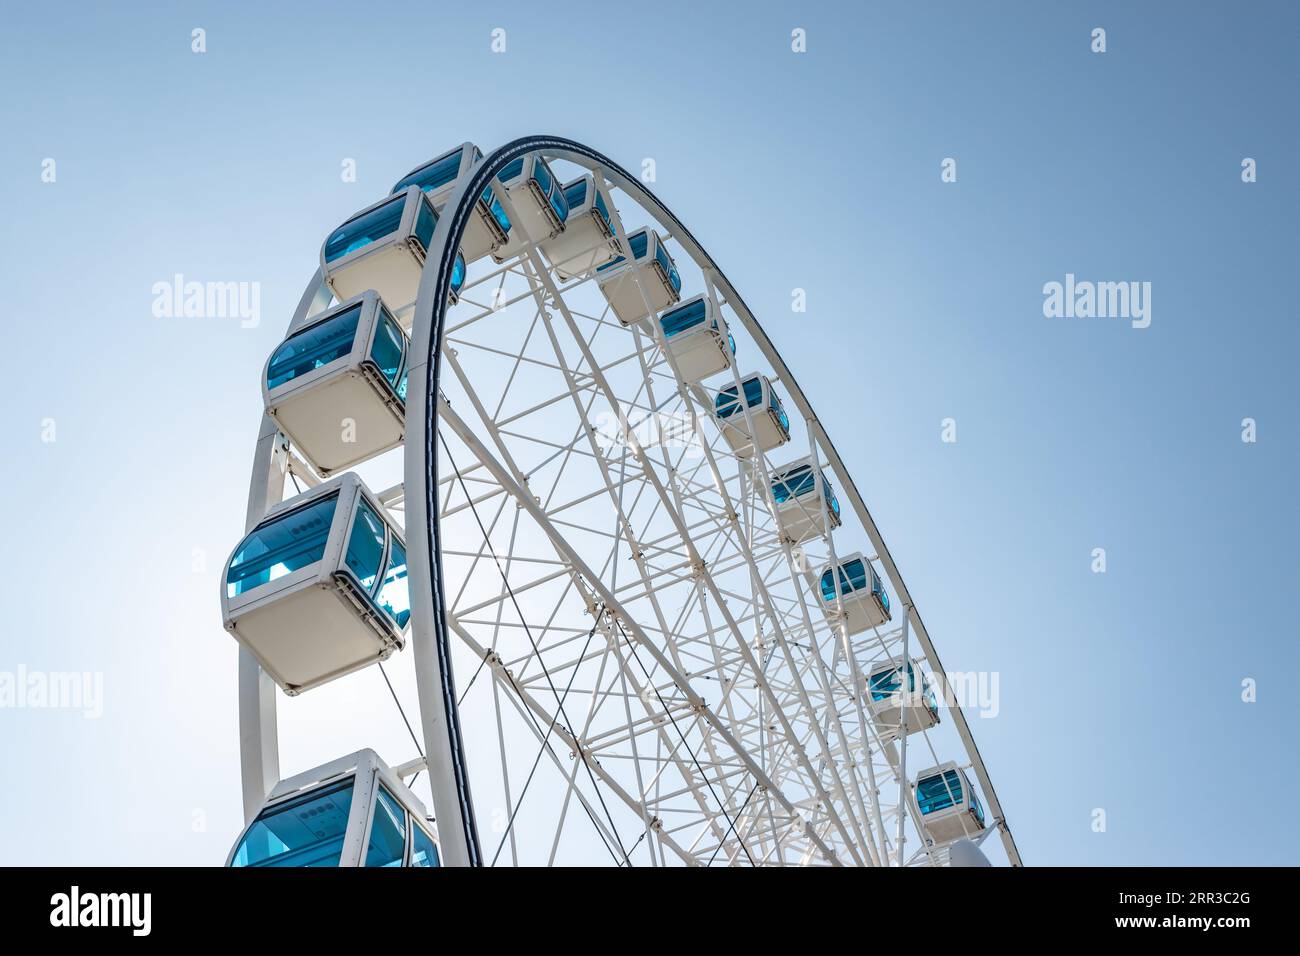 Riesenrad gegen blauen Himmel. Attraktion in Helsinki, Finnland. Stockfoto